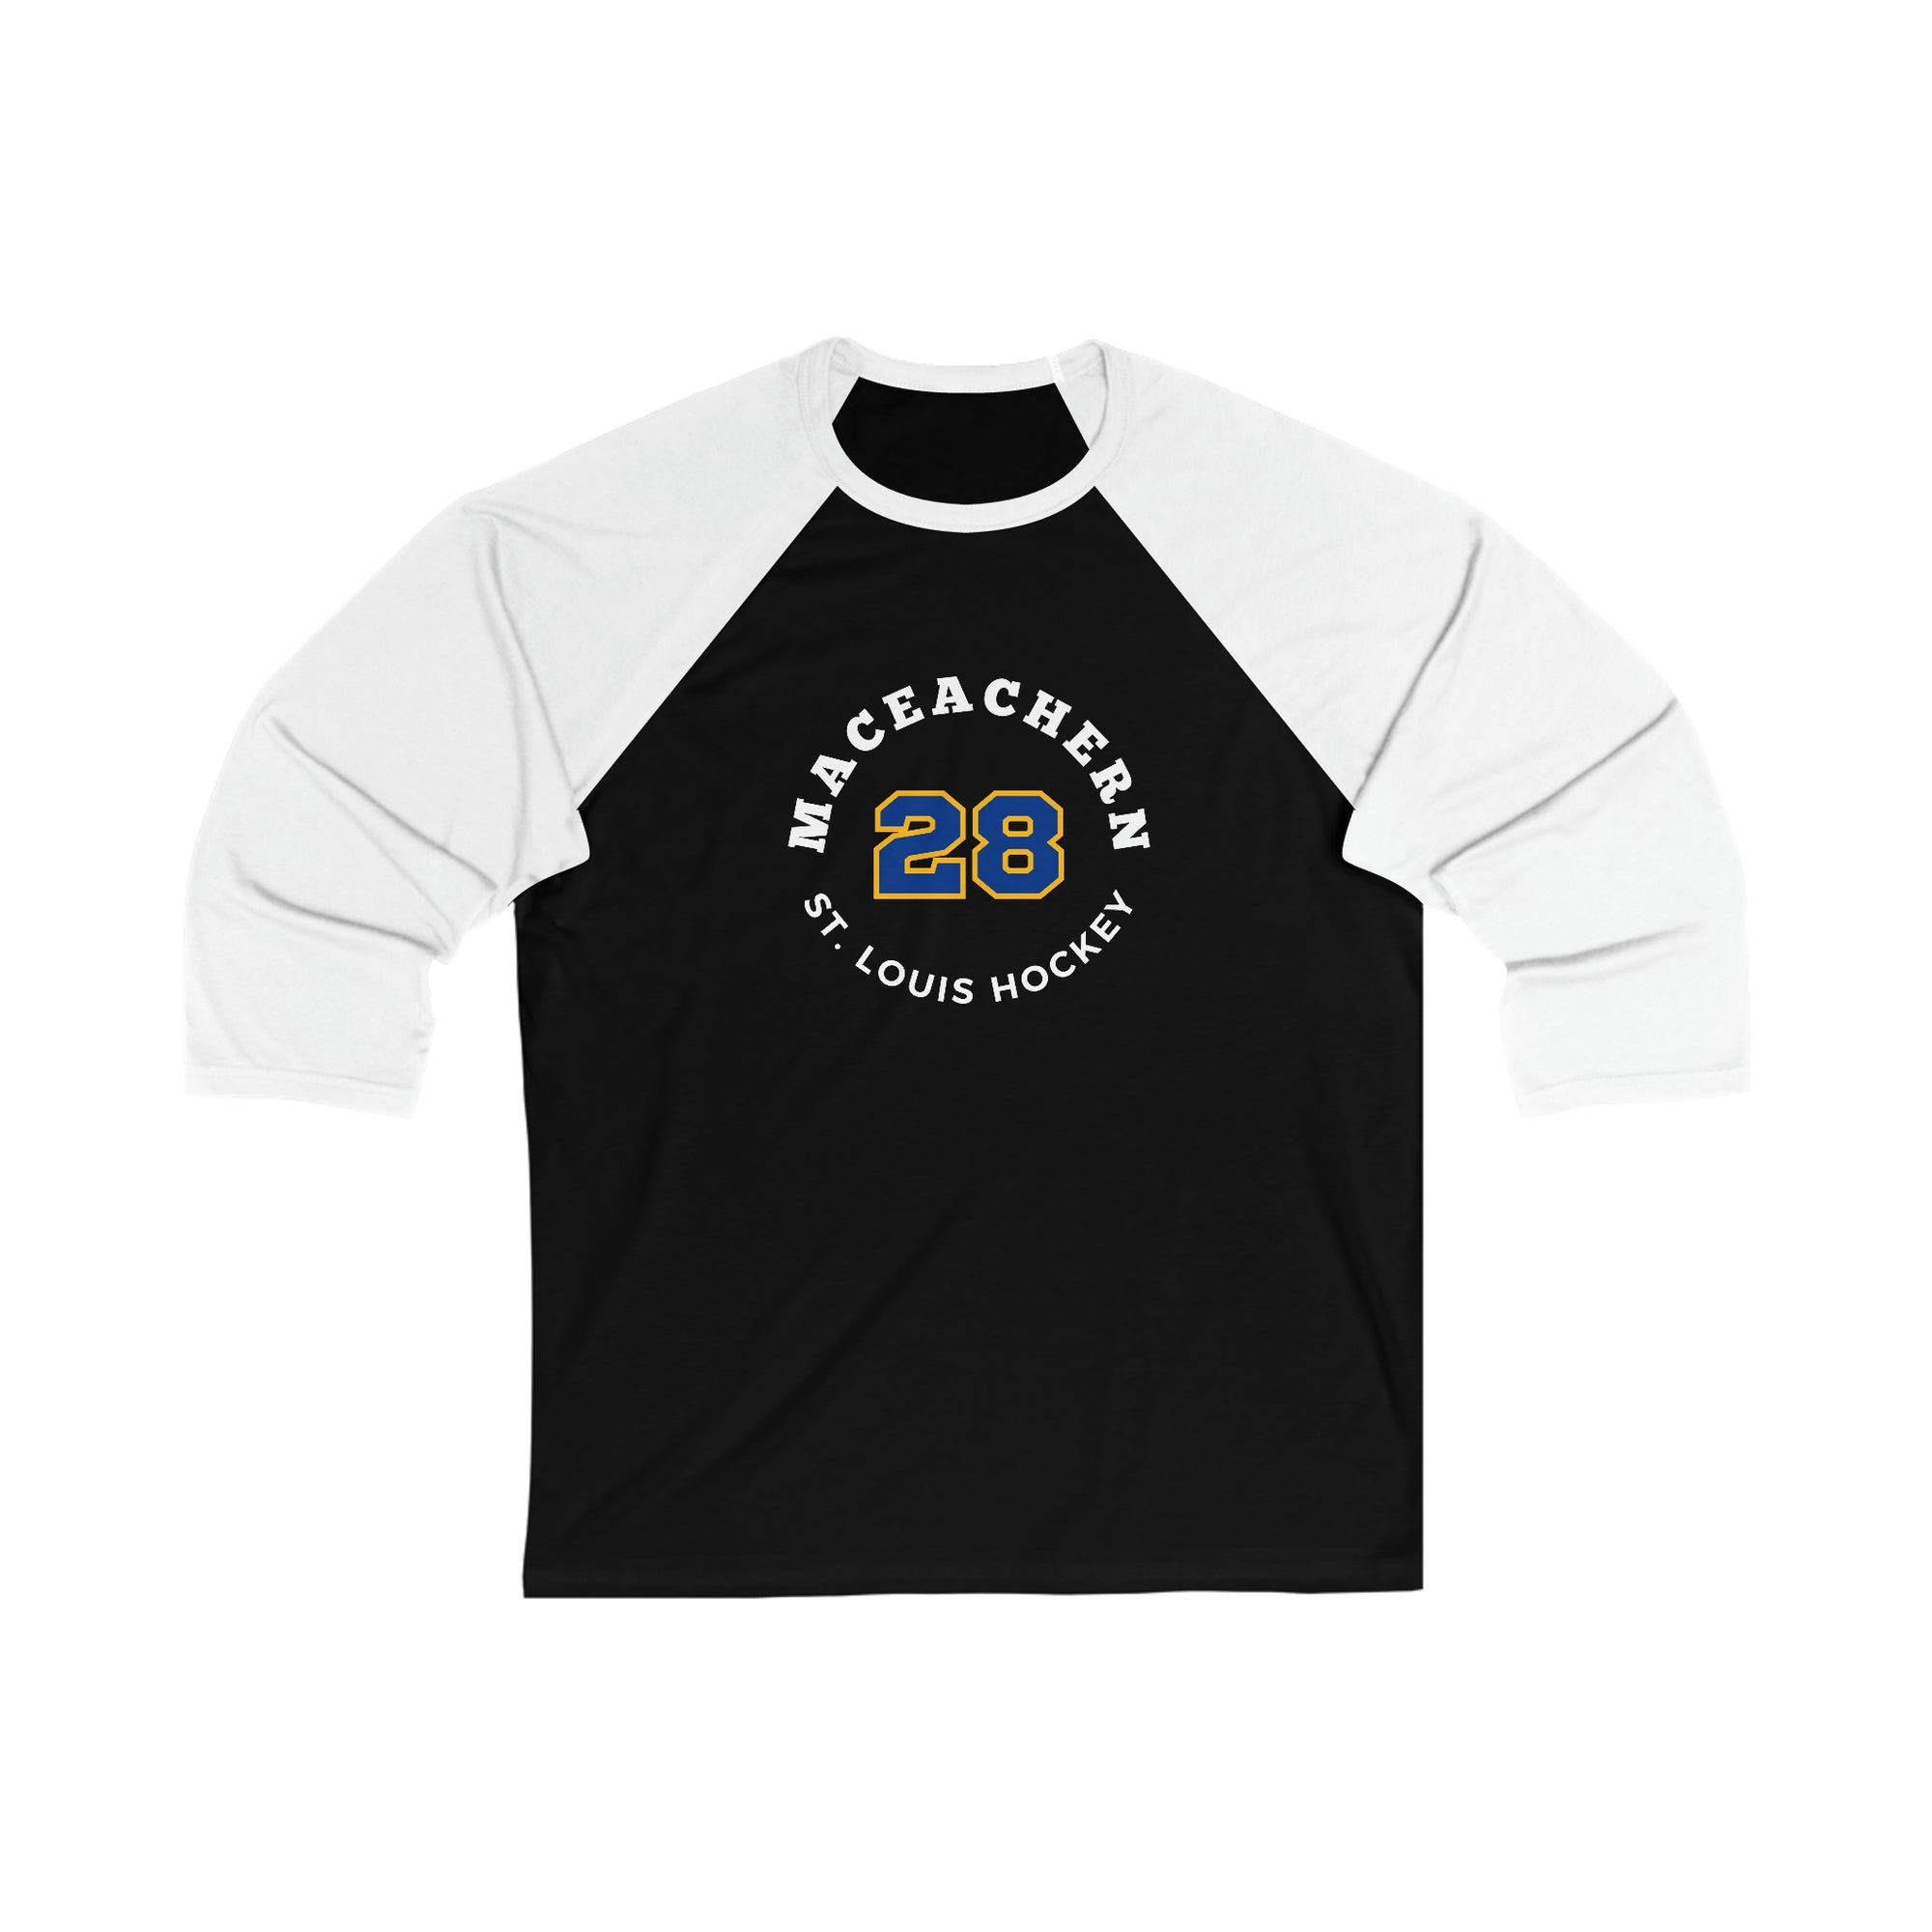 MacEachern 28 St. Louis Hockey Number Arch Design Unisex Tri-Blend 3/4 Sleeve Raglan Baseball Shirt